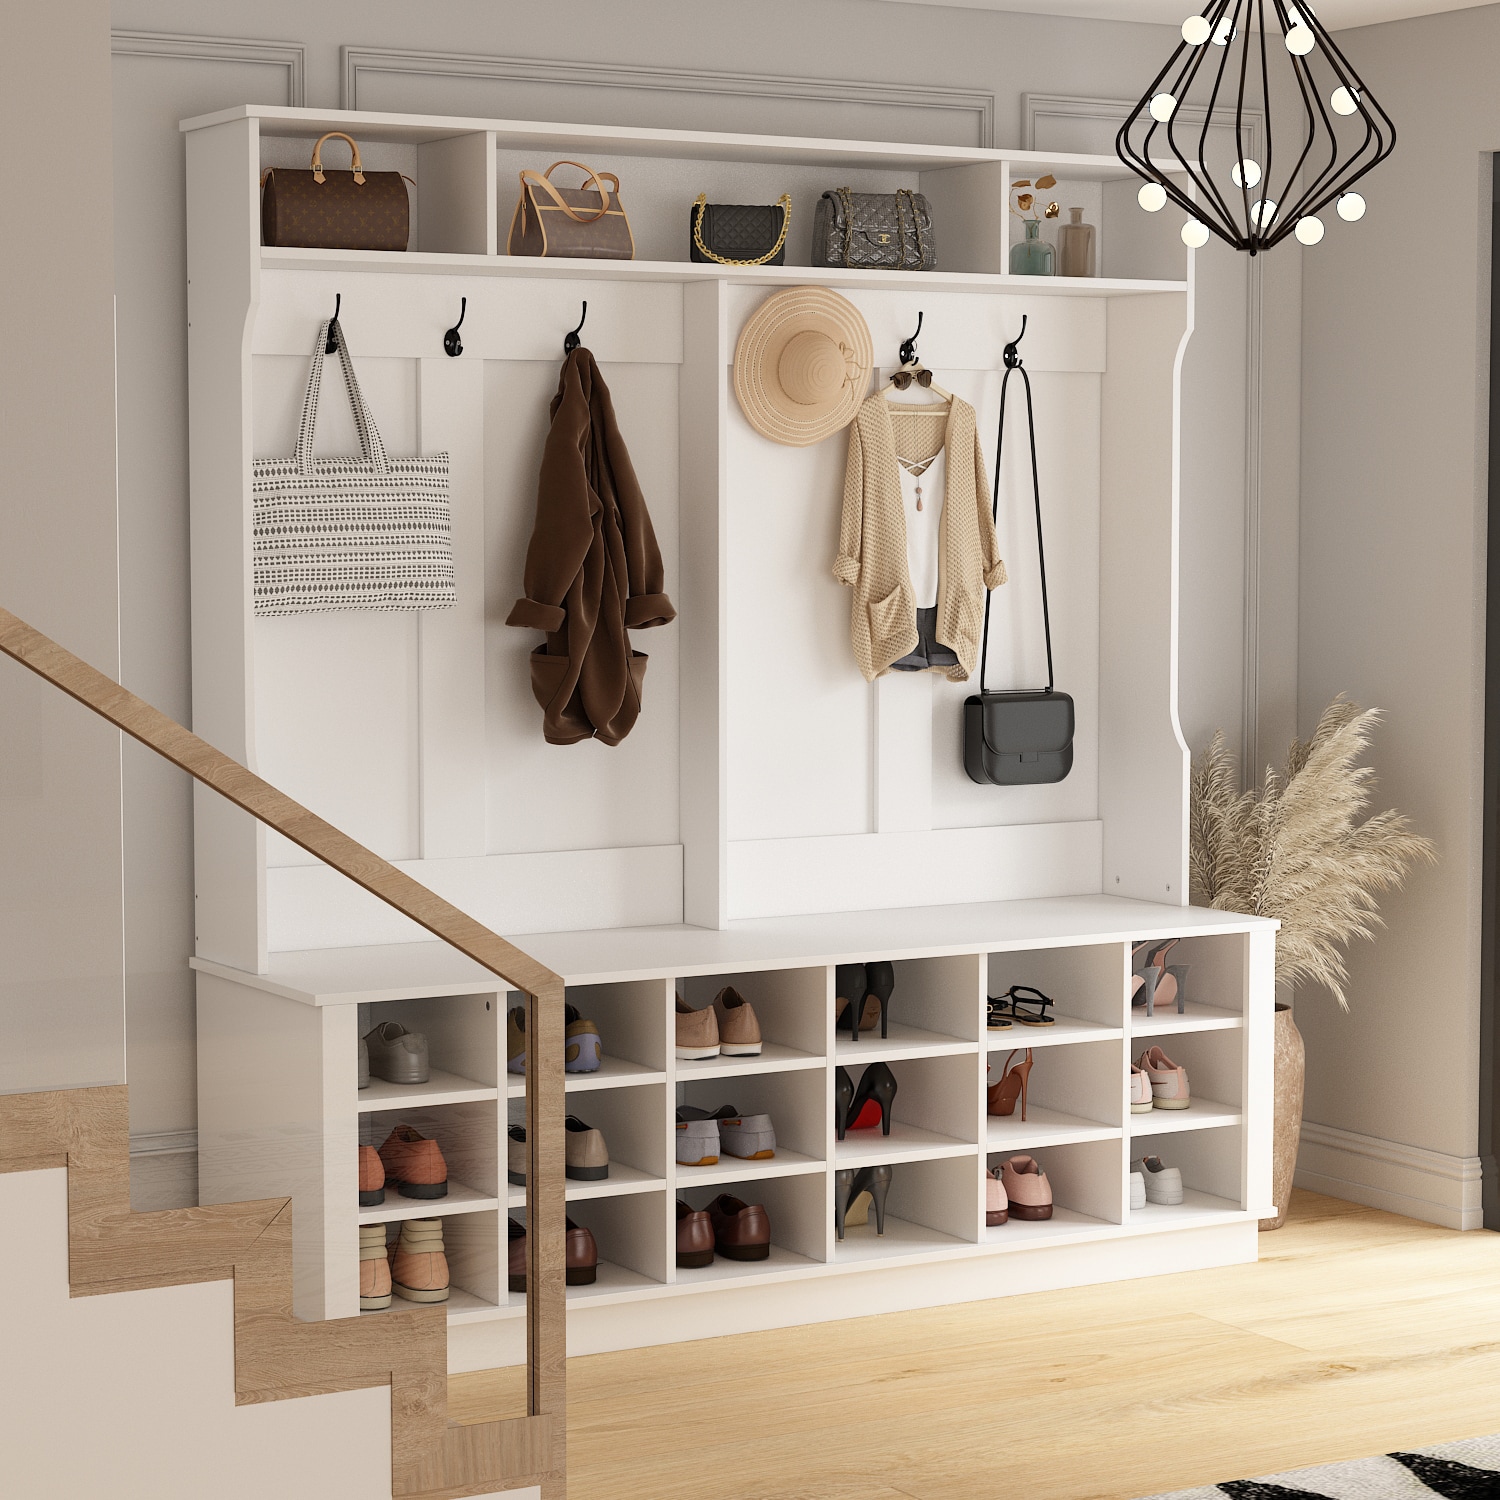 FUFU&GAGA Contemporary Hanging Wardrobe with Storage Compartments, Coat ...